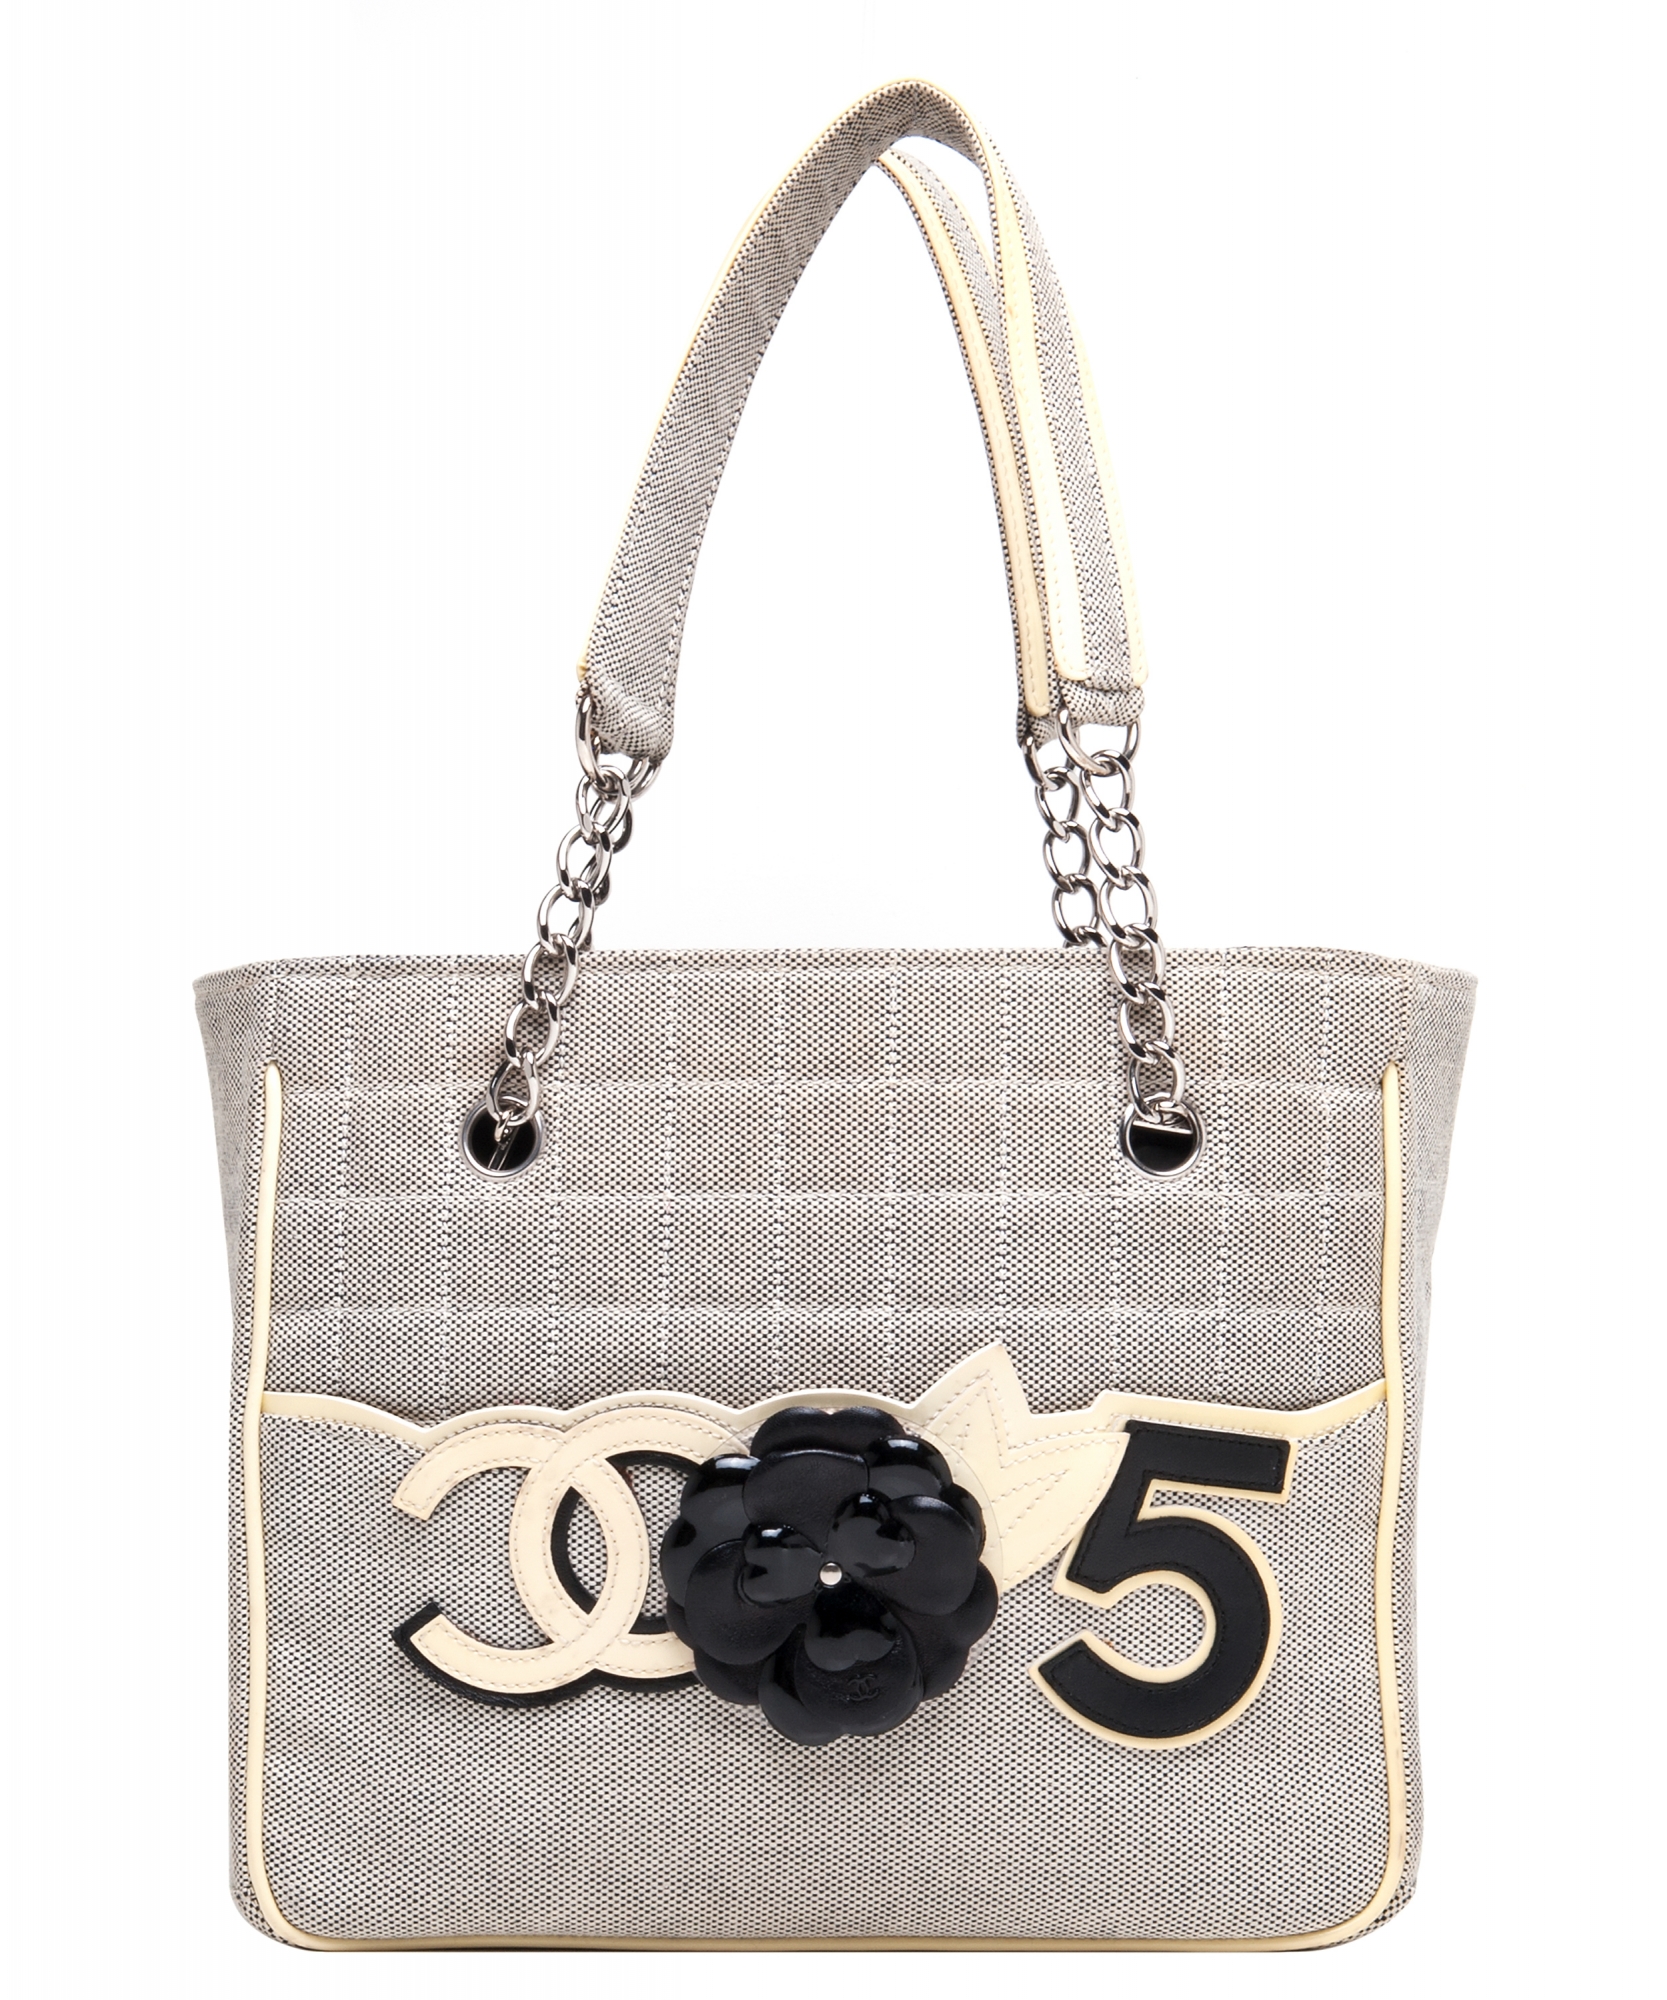 Chanel Camellia No 5 Tote Bag - Chanel | ArtListings